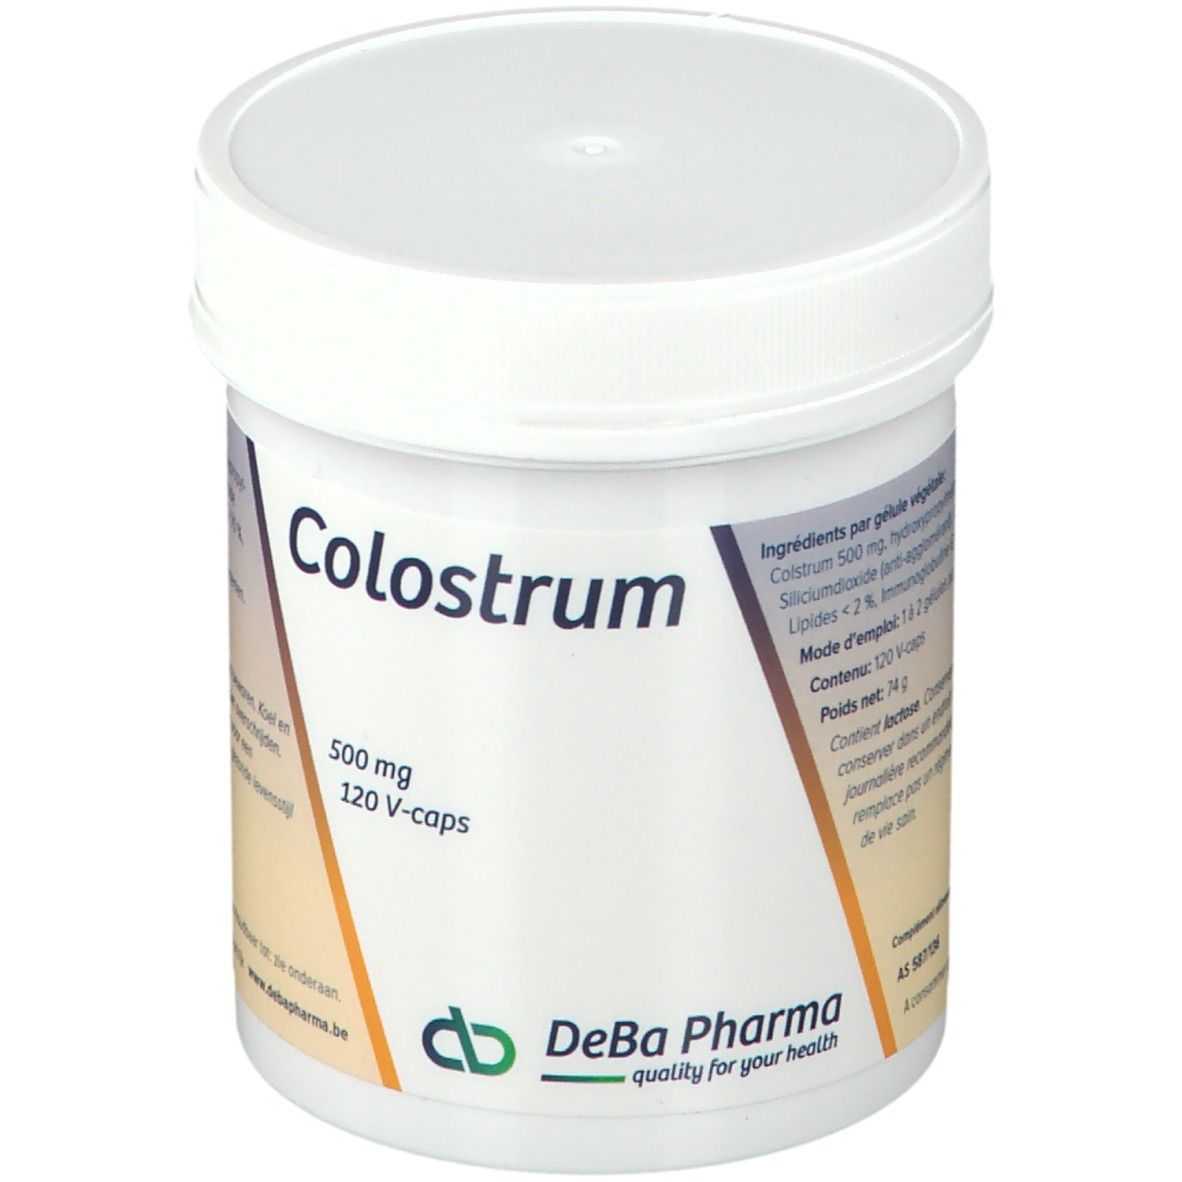 DeBa Pharma Colostrum 500 mg